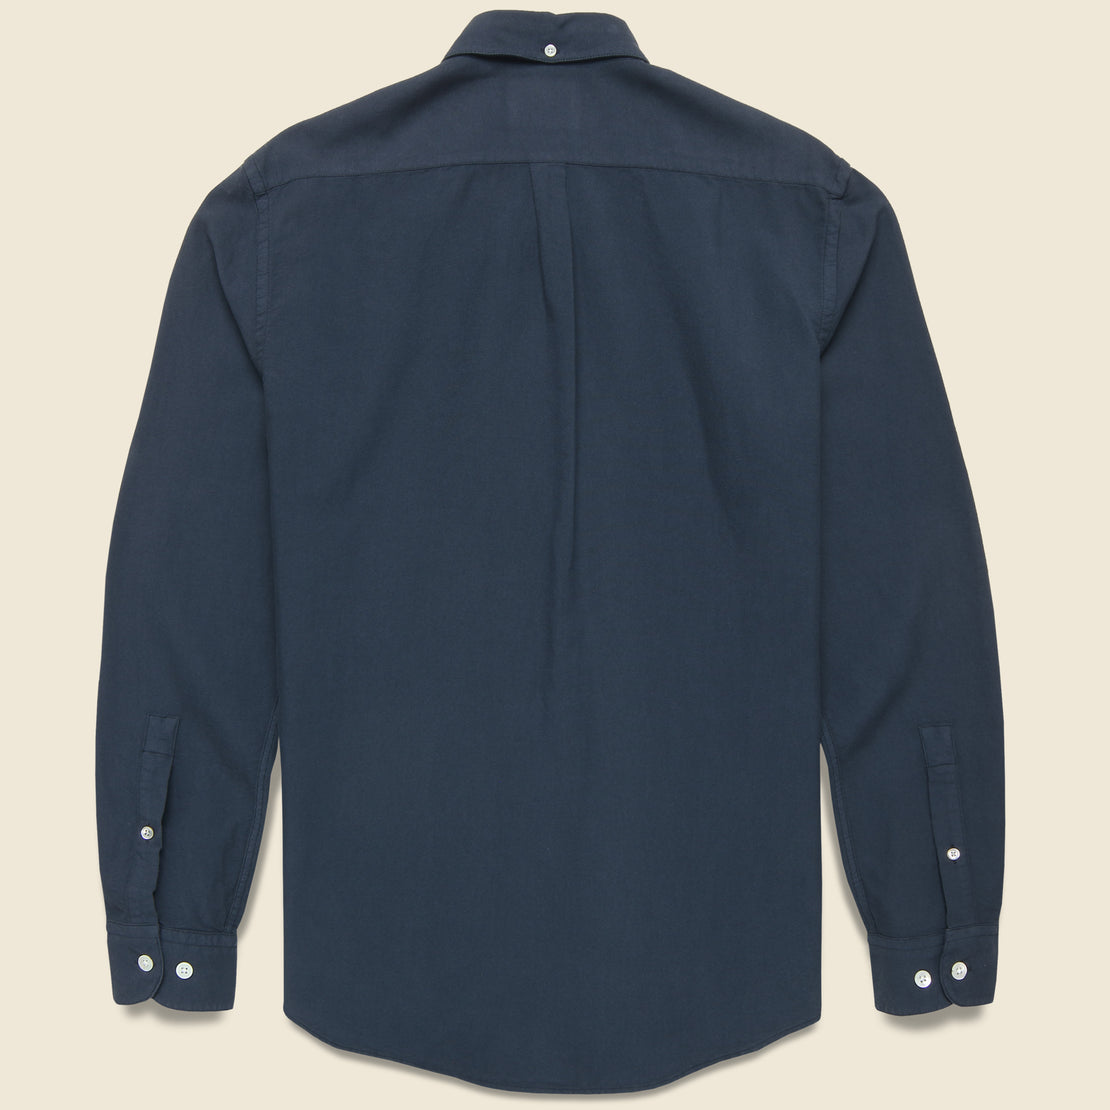 Belavista Oxford Shirt - Blue - Portuguese Flannel - STAG Provisions - Tops - L/S Woven - Solid